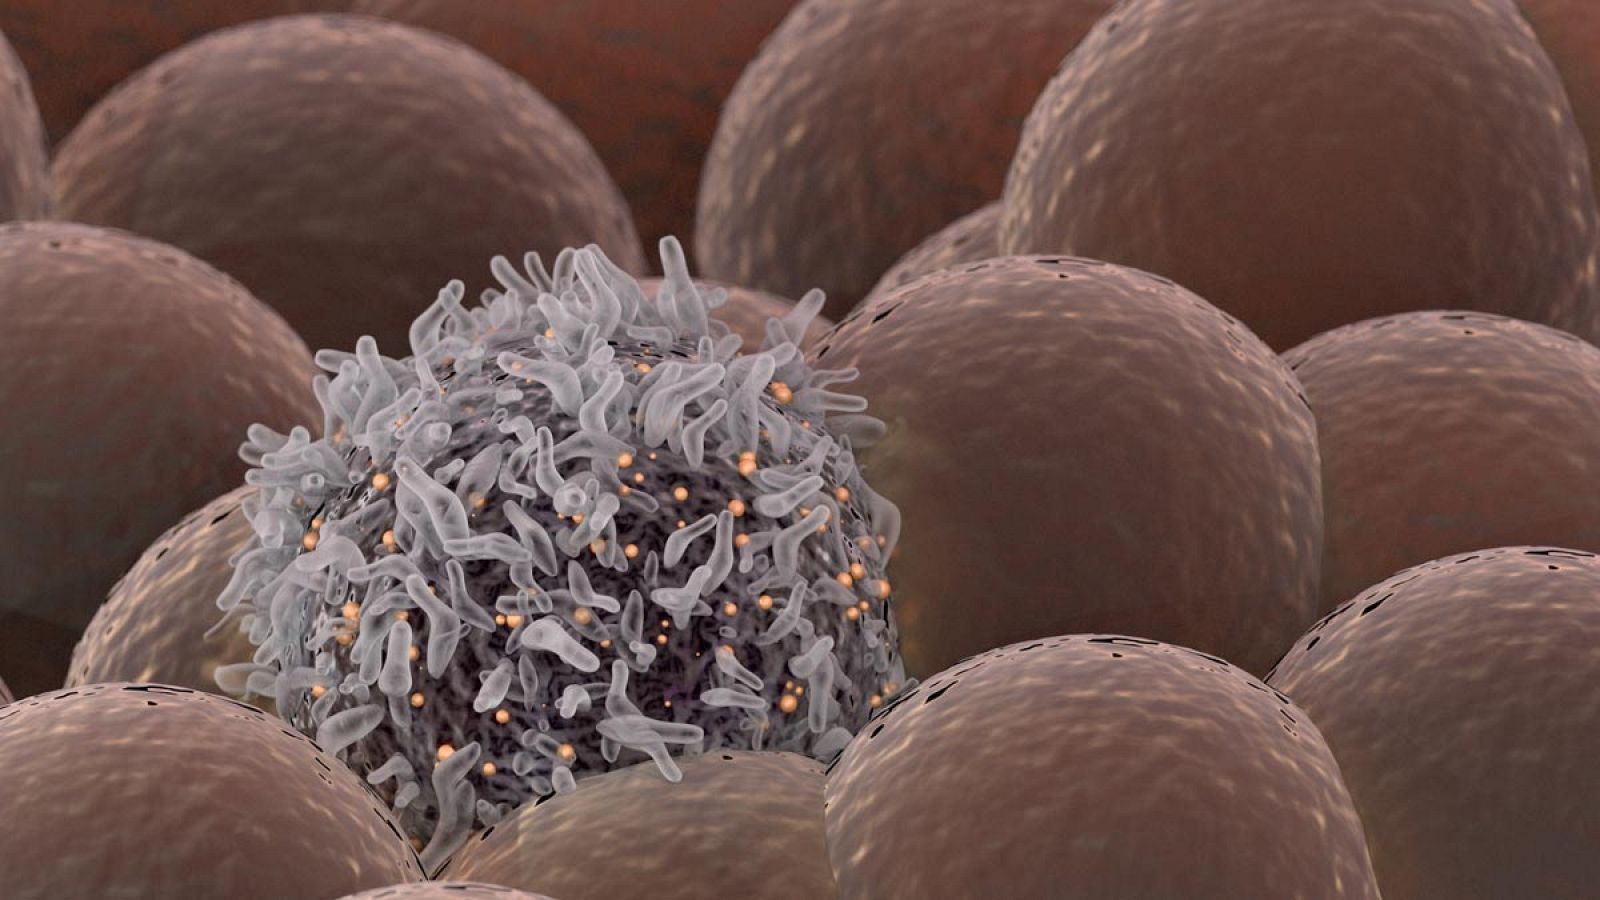 Una célula cancerígena rodeada por células sanas